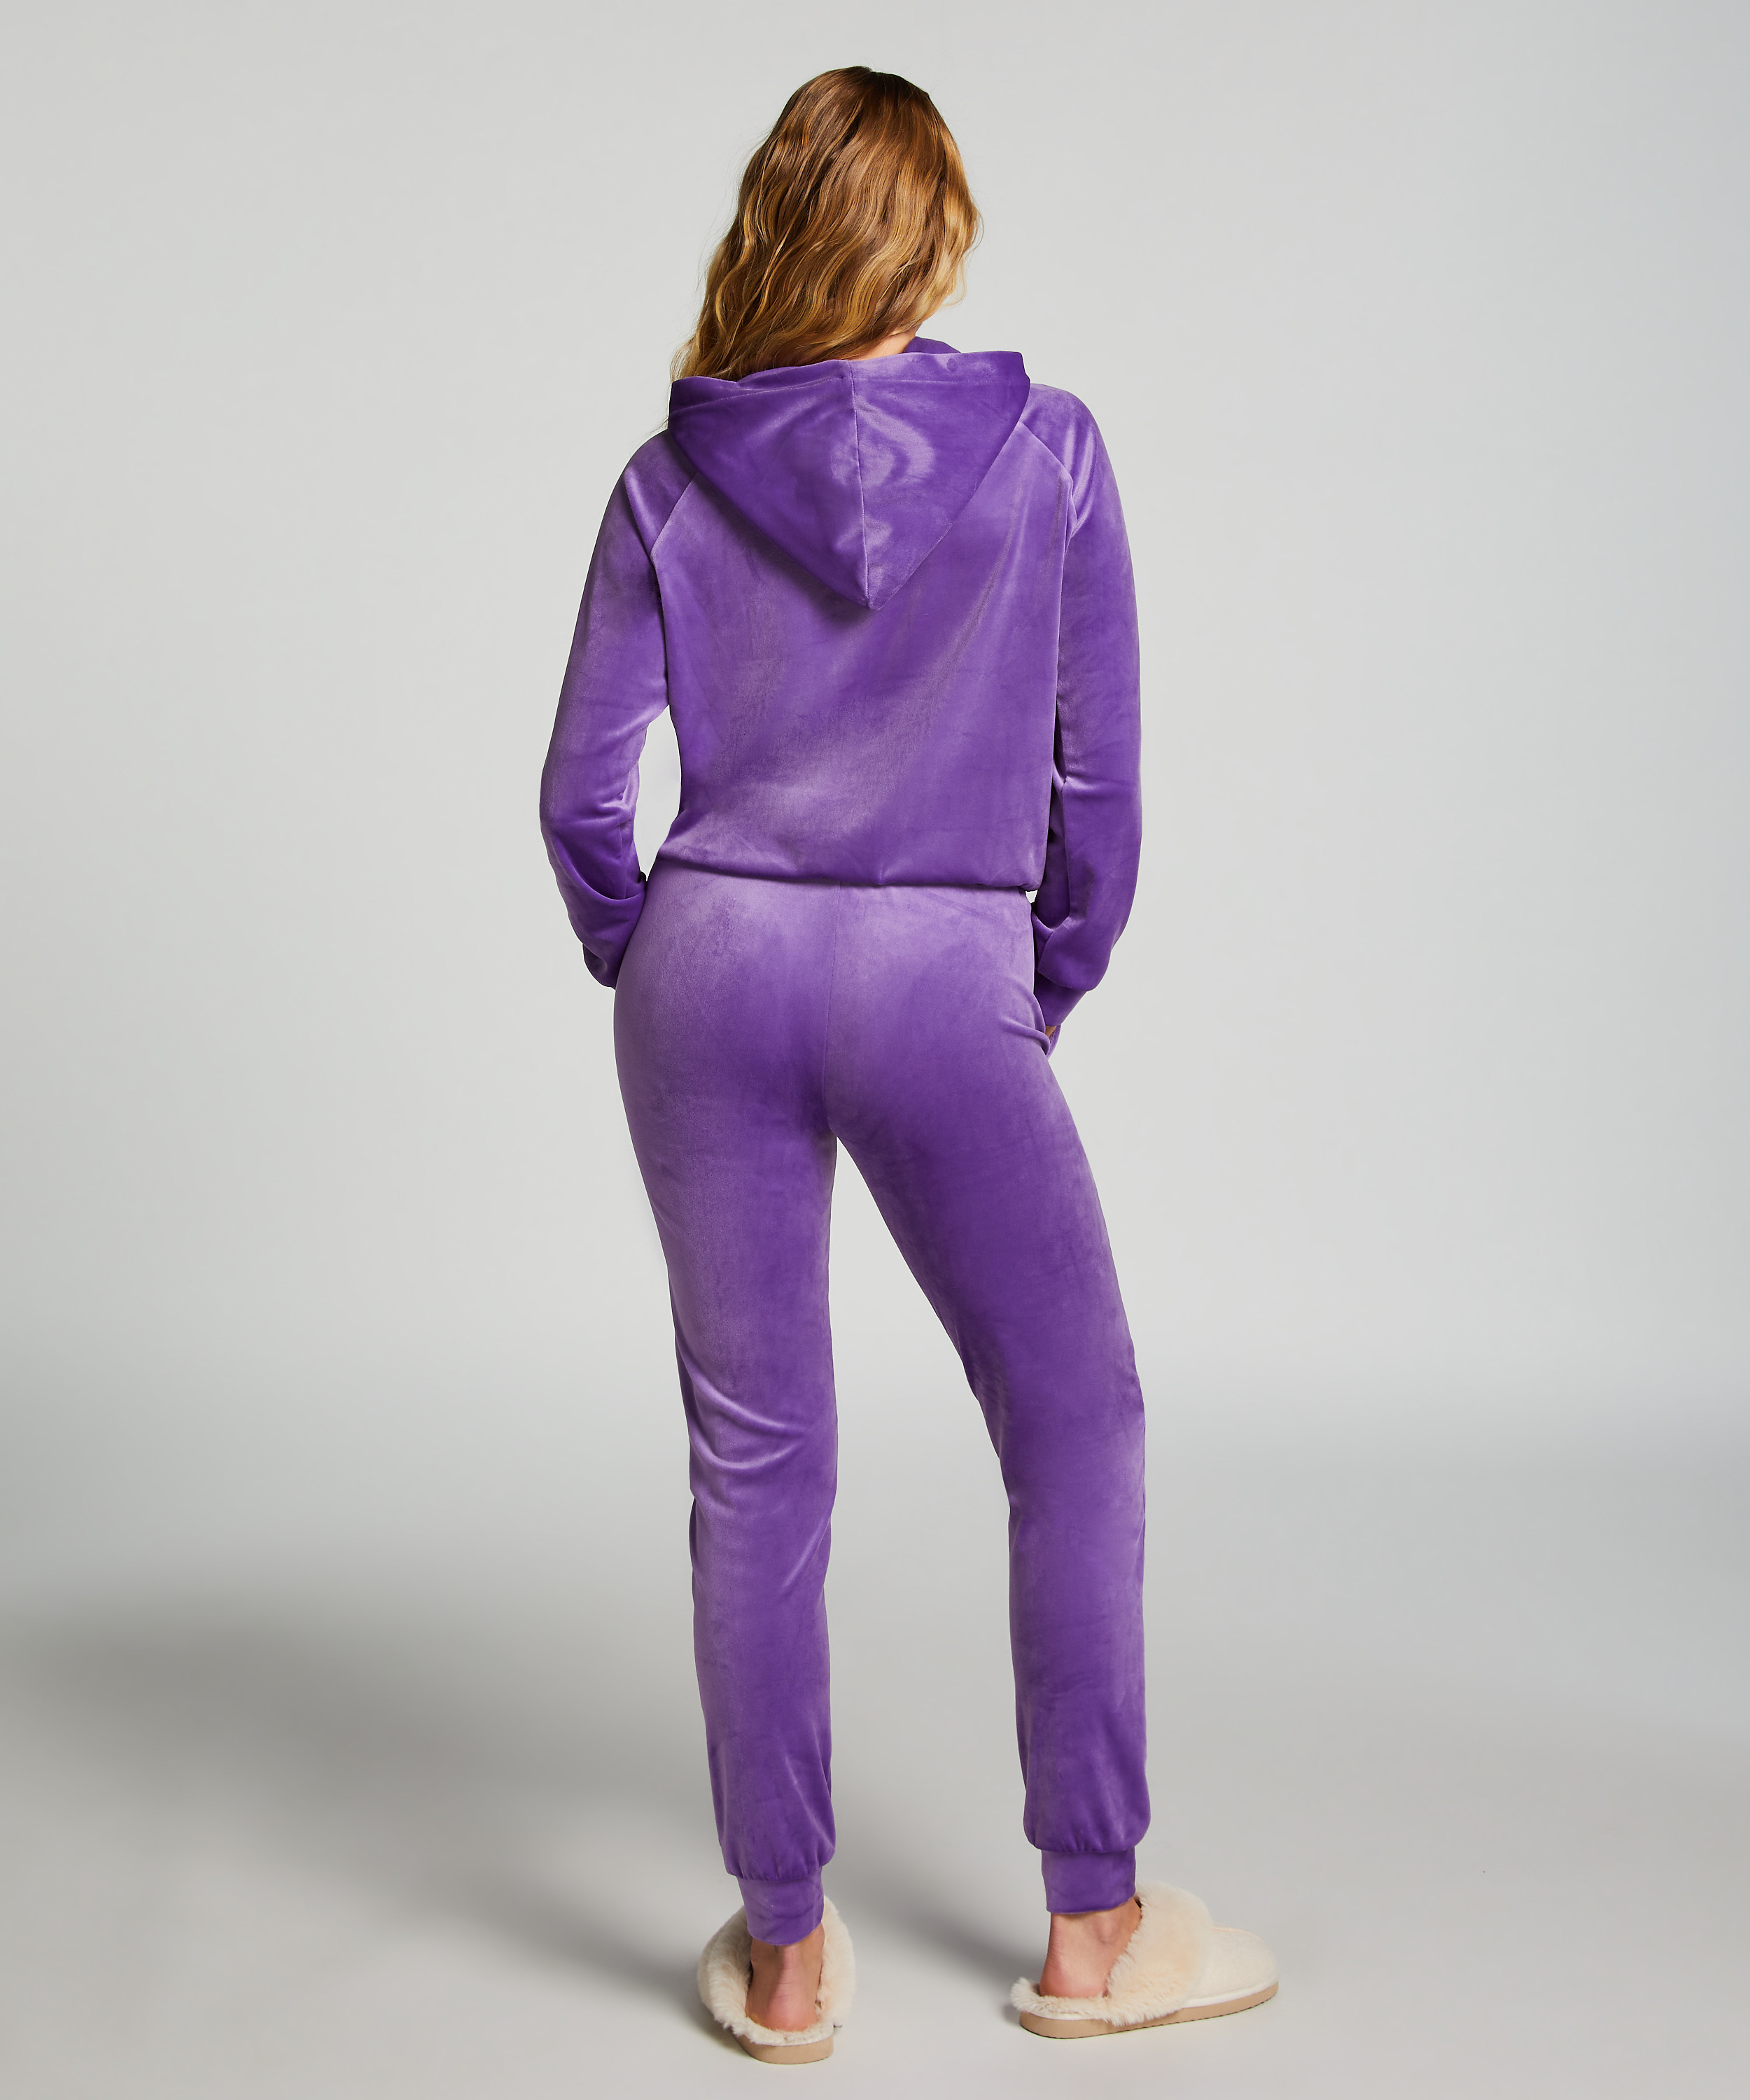 Velours Jogging Pants, Purple, main